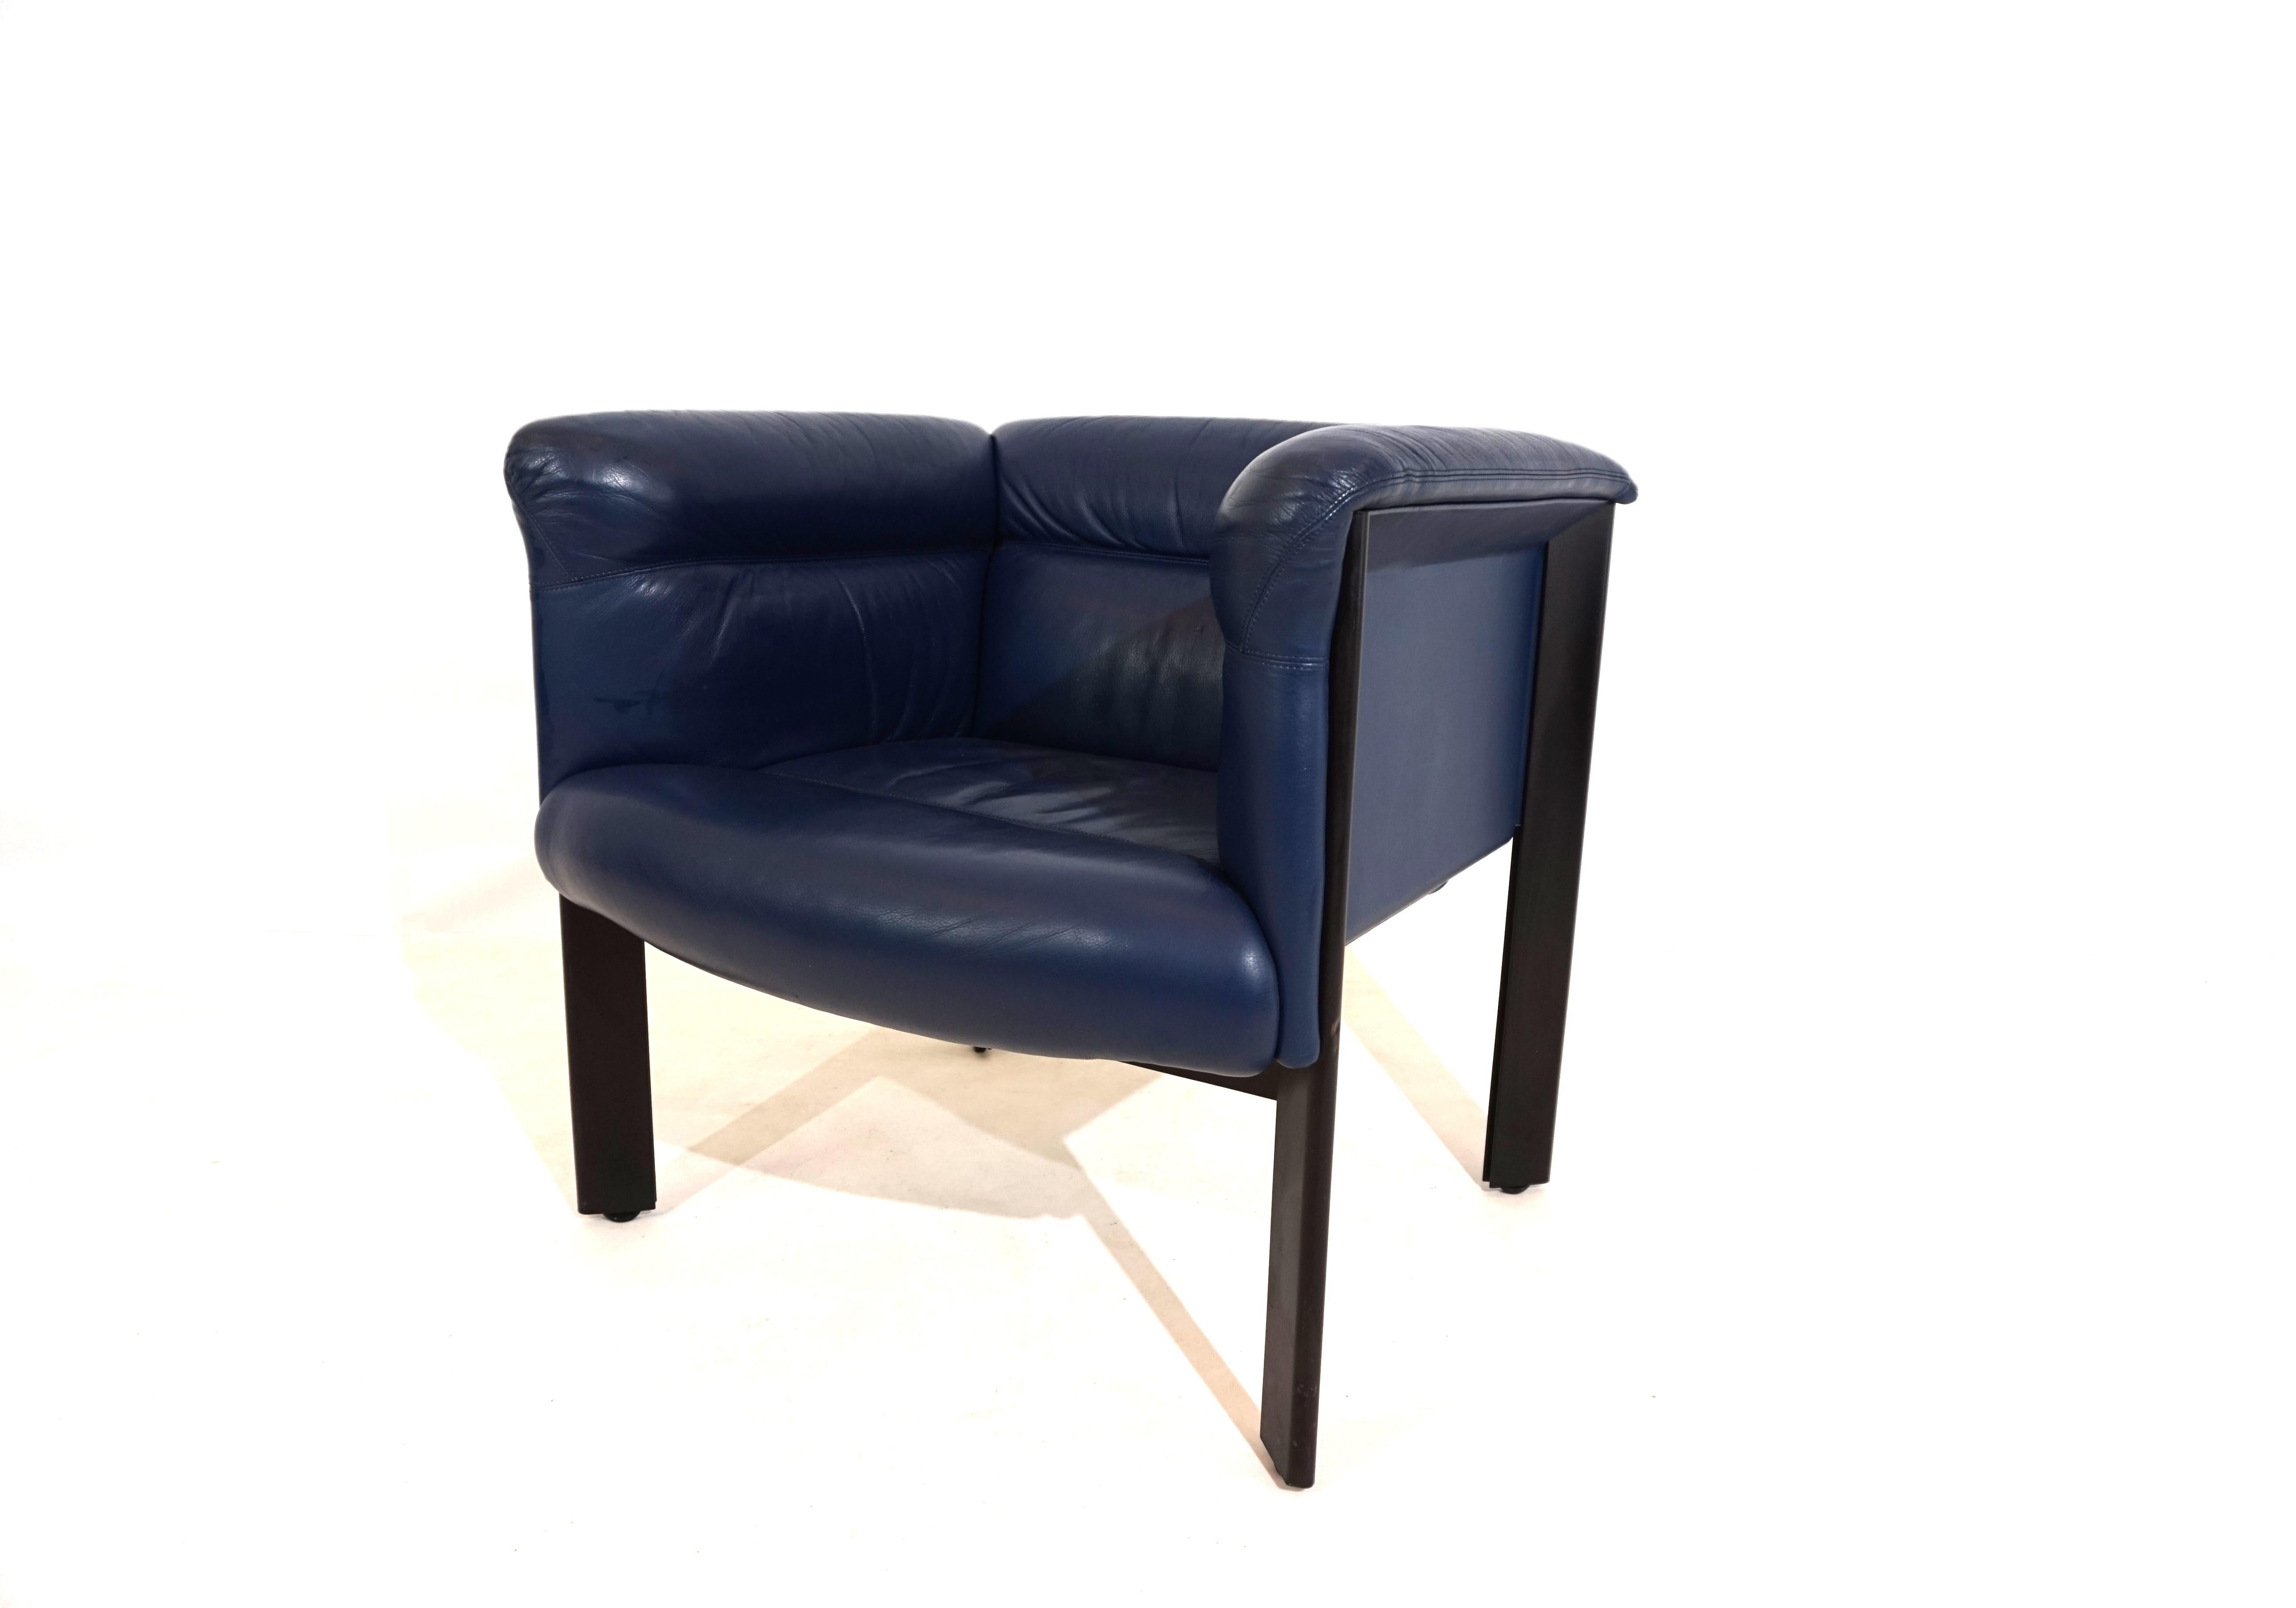 Poltrona Frau Interlude leather armchair by Marco Zanuso For Sale 1